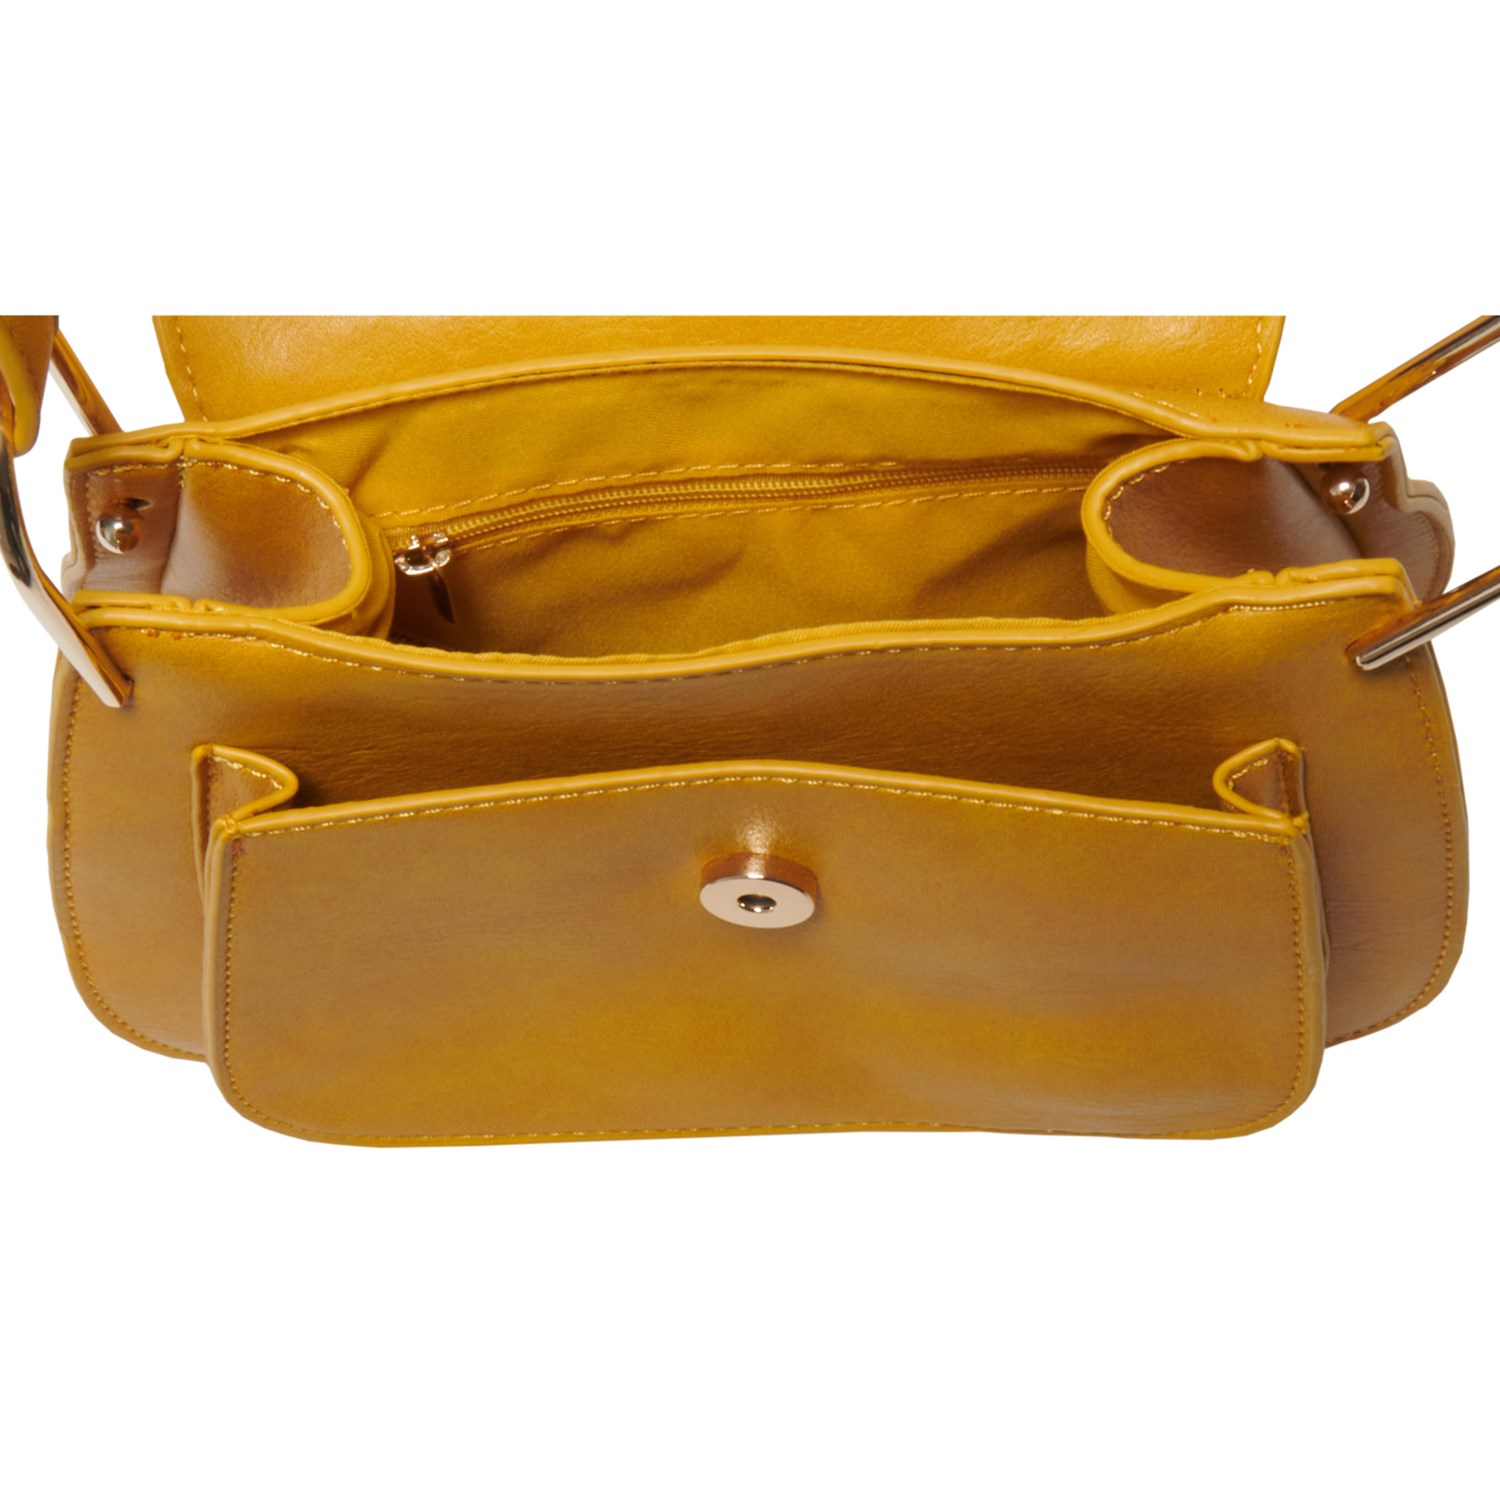 Women's crossbody bag in orange braided leather